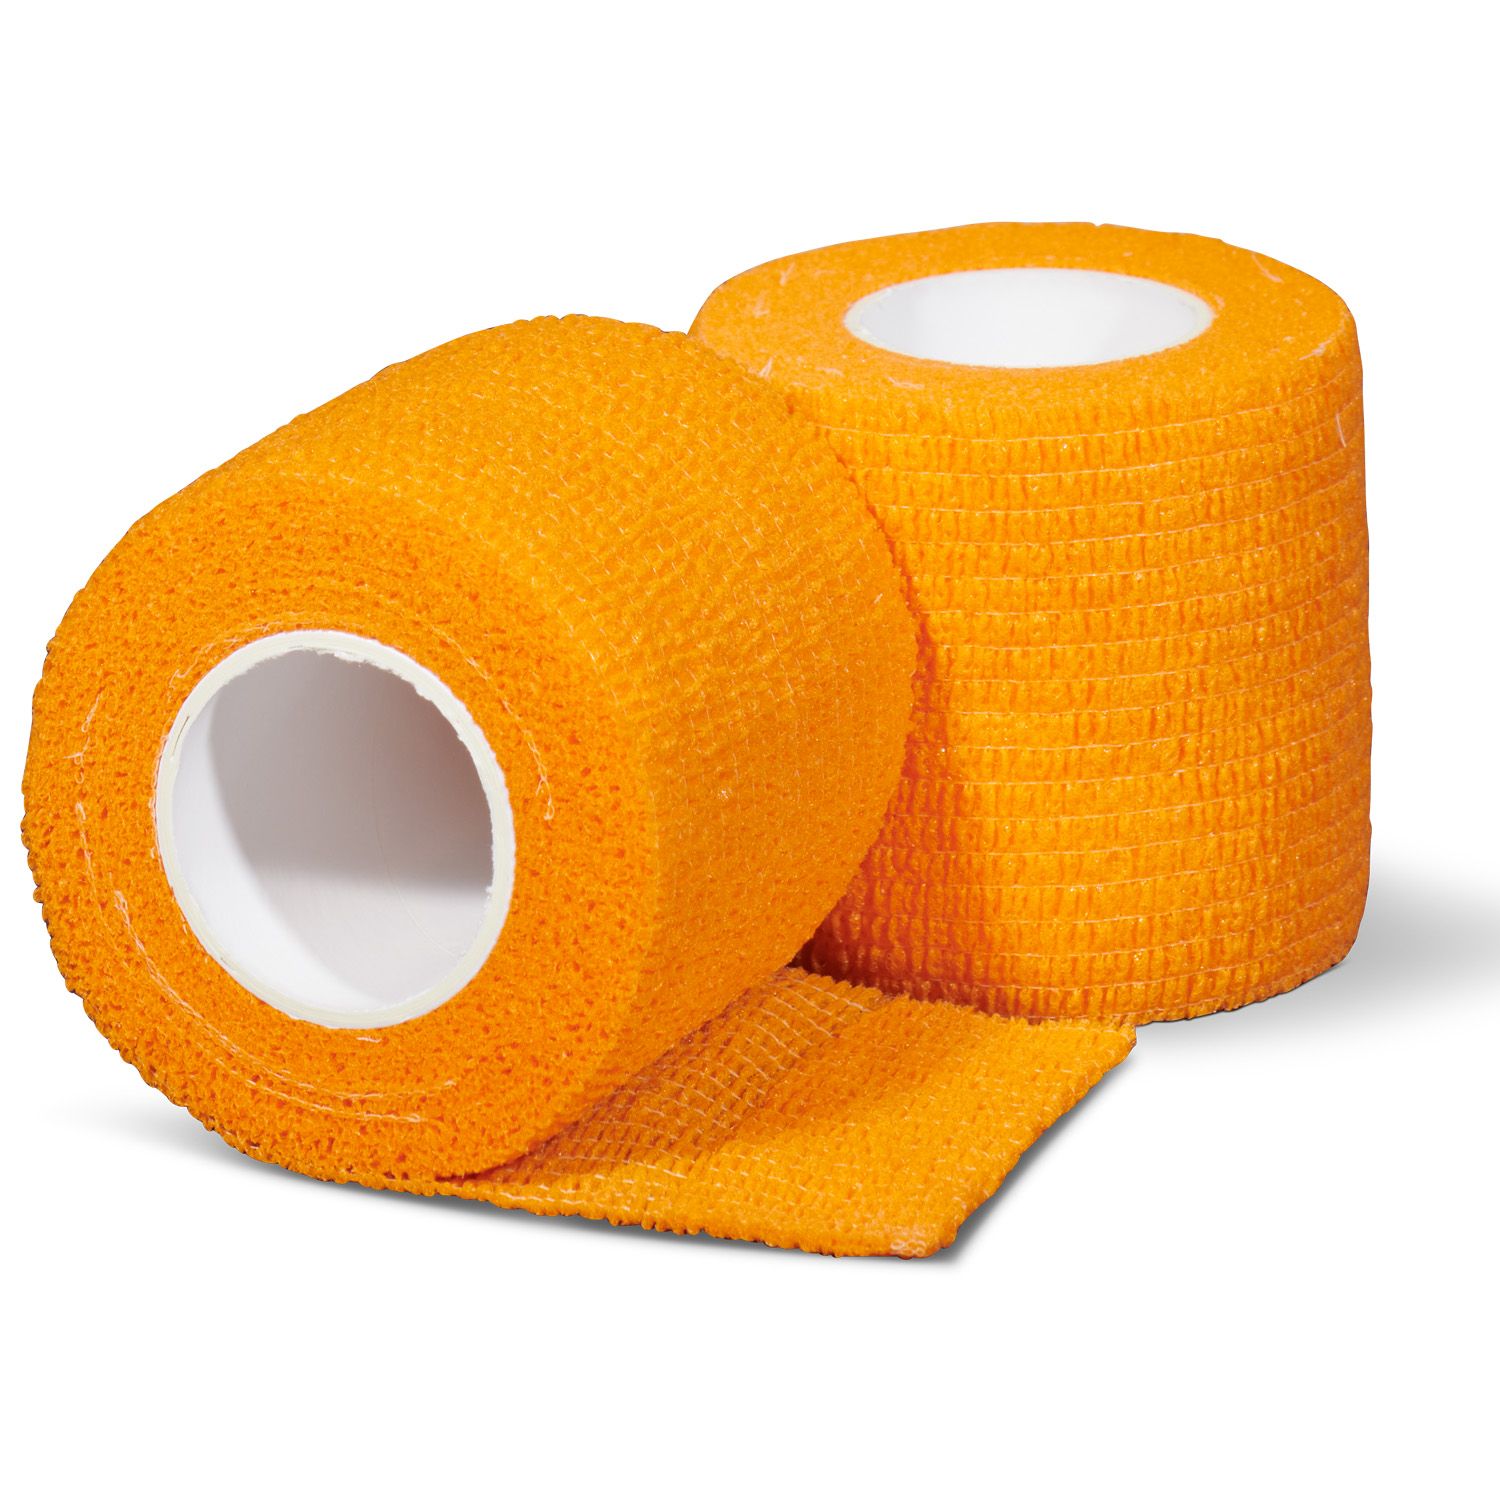 gladiator sports underwrap bandage per 8 rolls orange